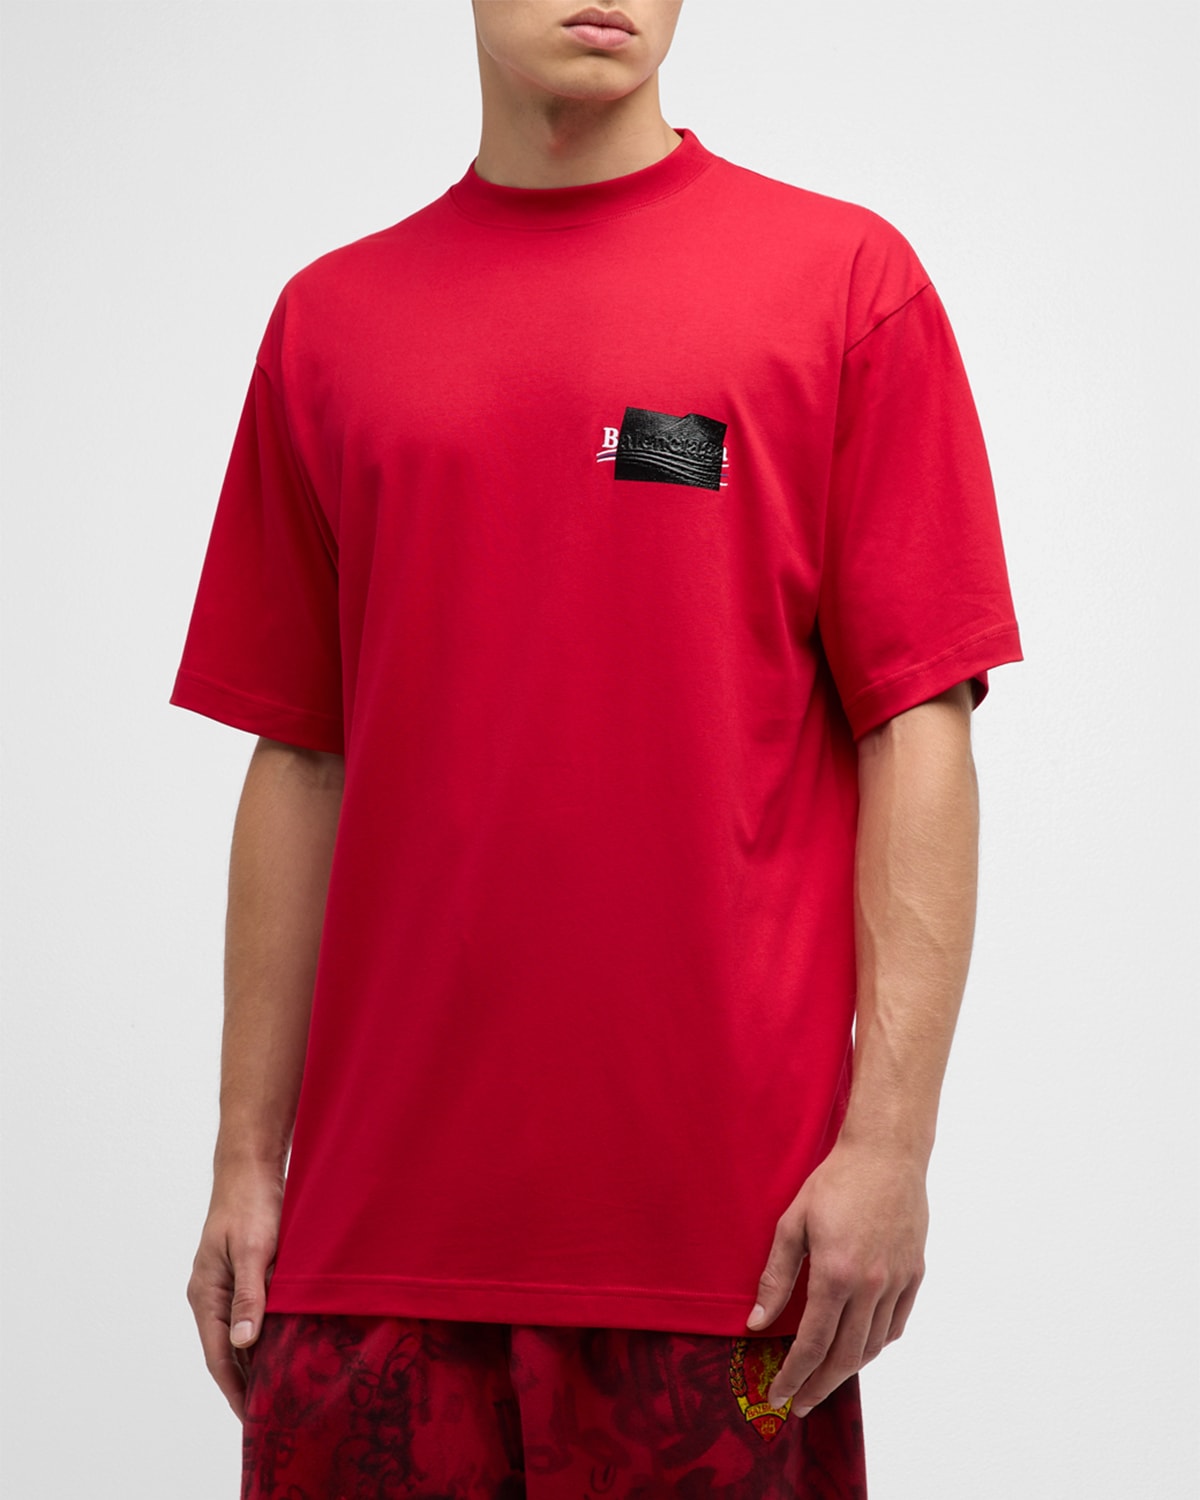 Men's Taped Campaign Logo T-Shirt